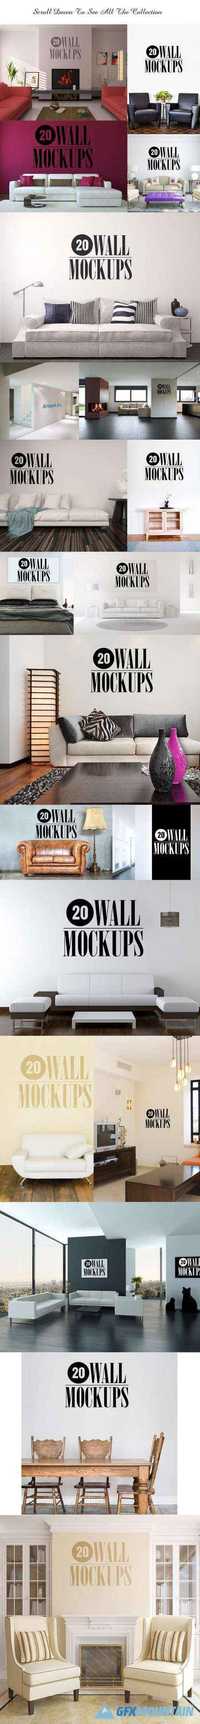 20 Wall Art Mockups 390403